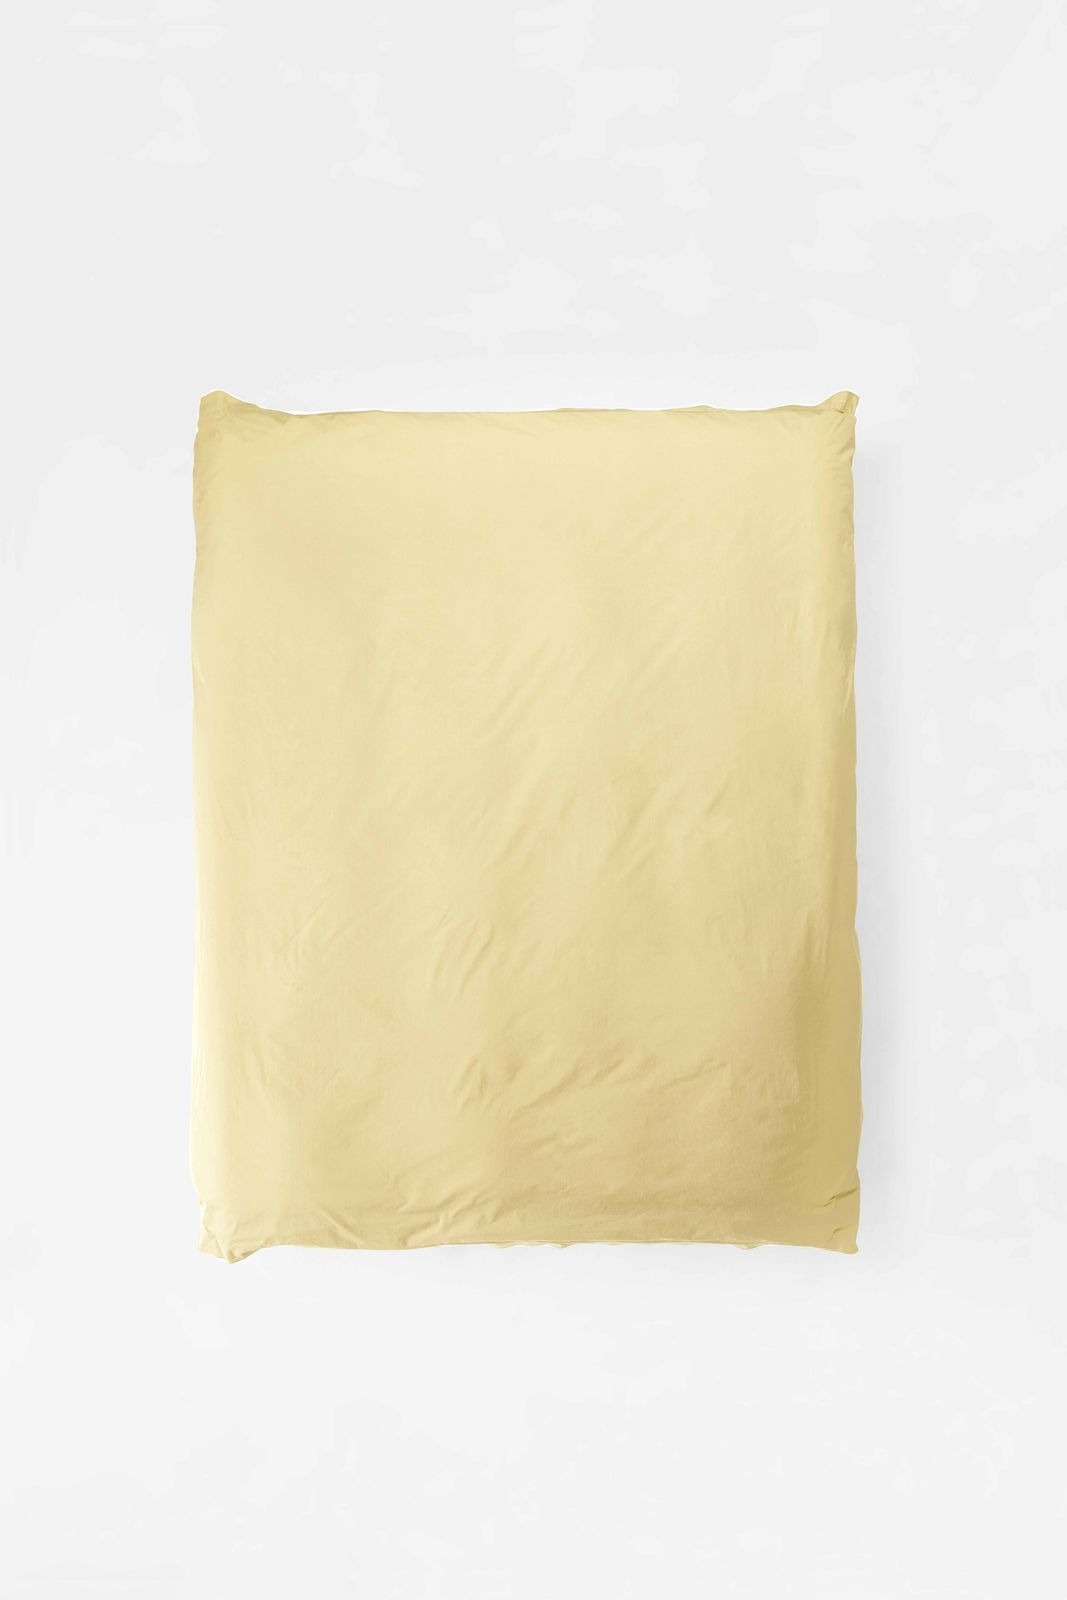 Mono Organic Cotton Percale Duvet Cover - Maize Duvet Covers in Super King